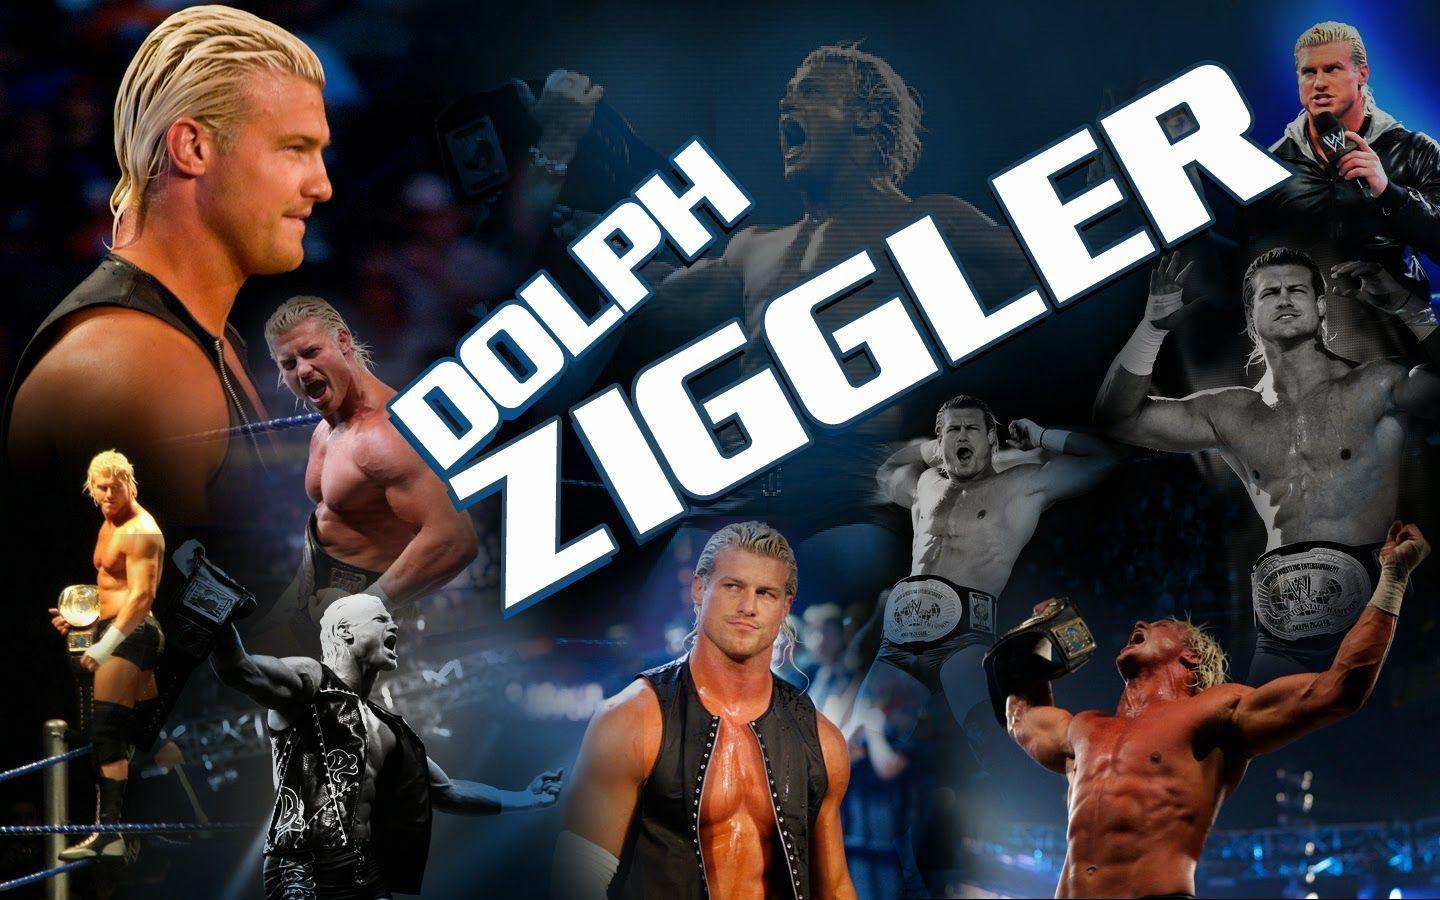 Dolph Ziggler HD Wallpaper Free Download. WWE HD WALLPAPER FREE